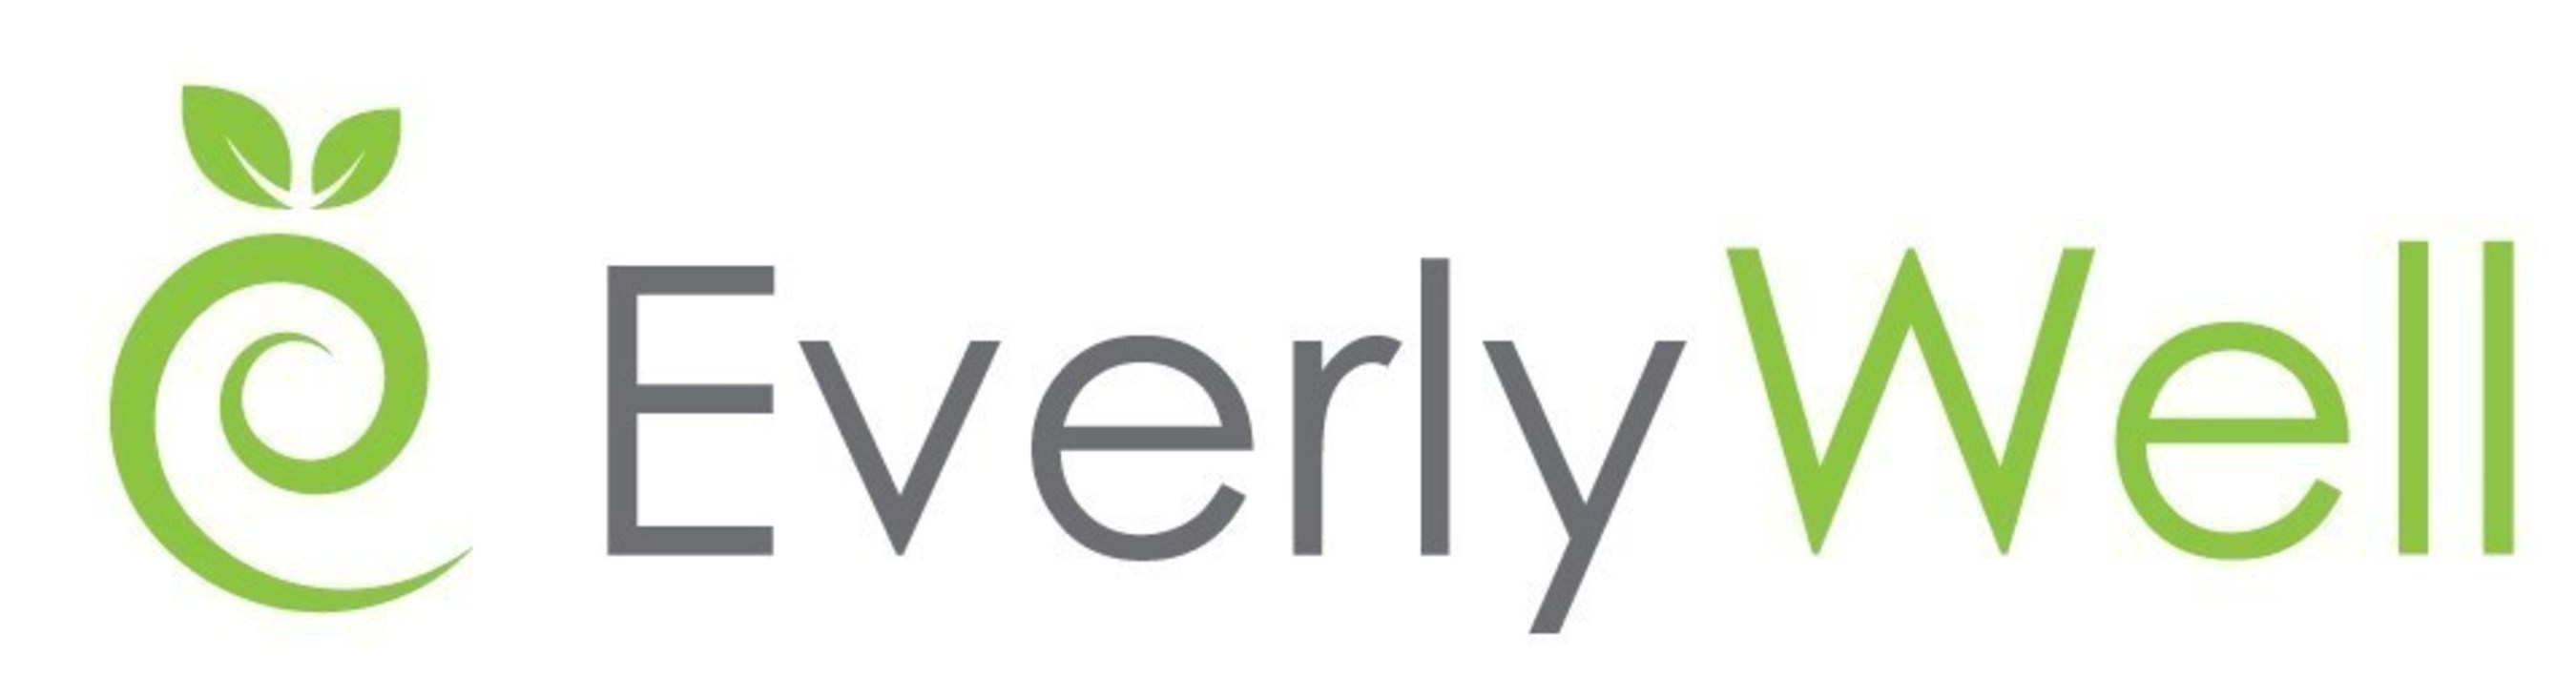 EverlyWell Logo